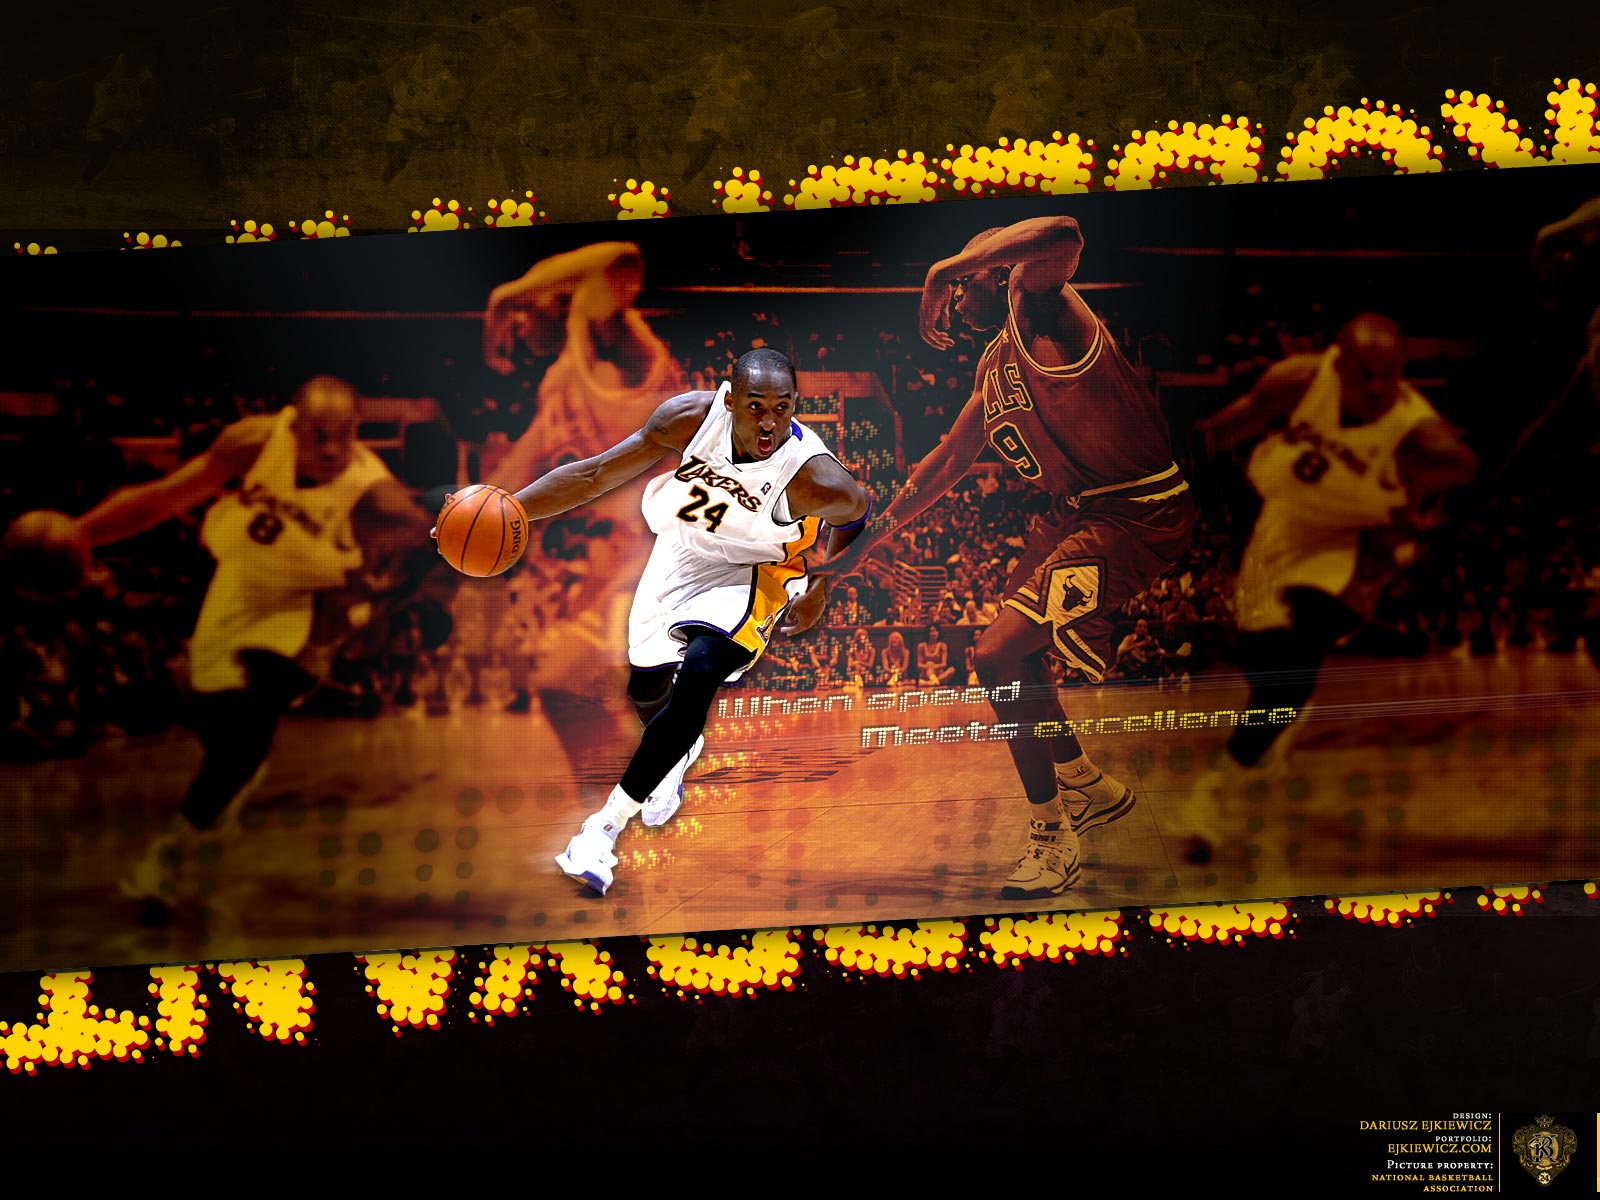 Kobe Bryant wallpaper